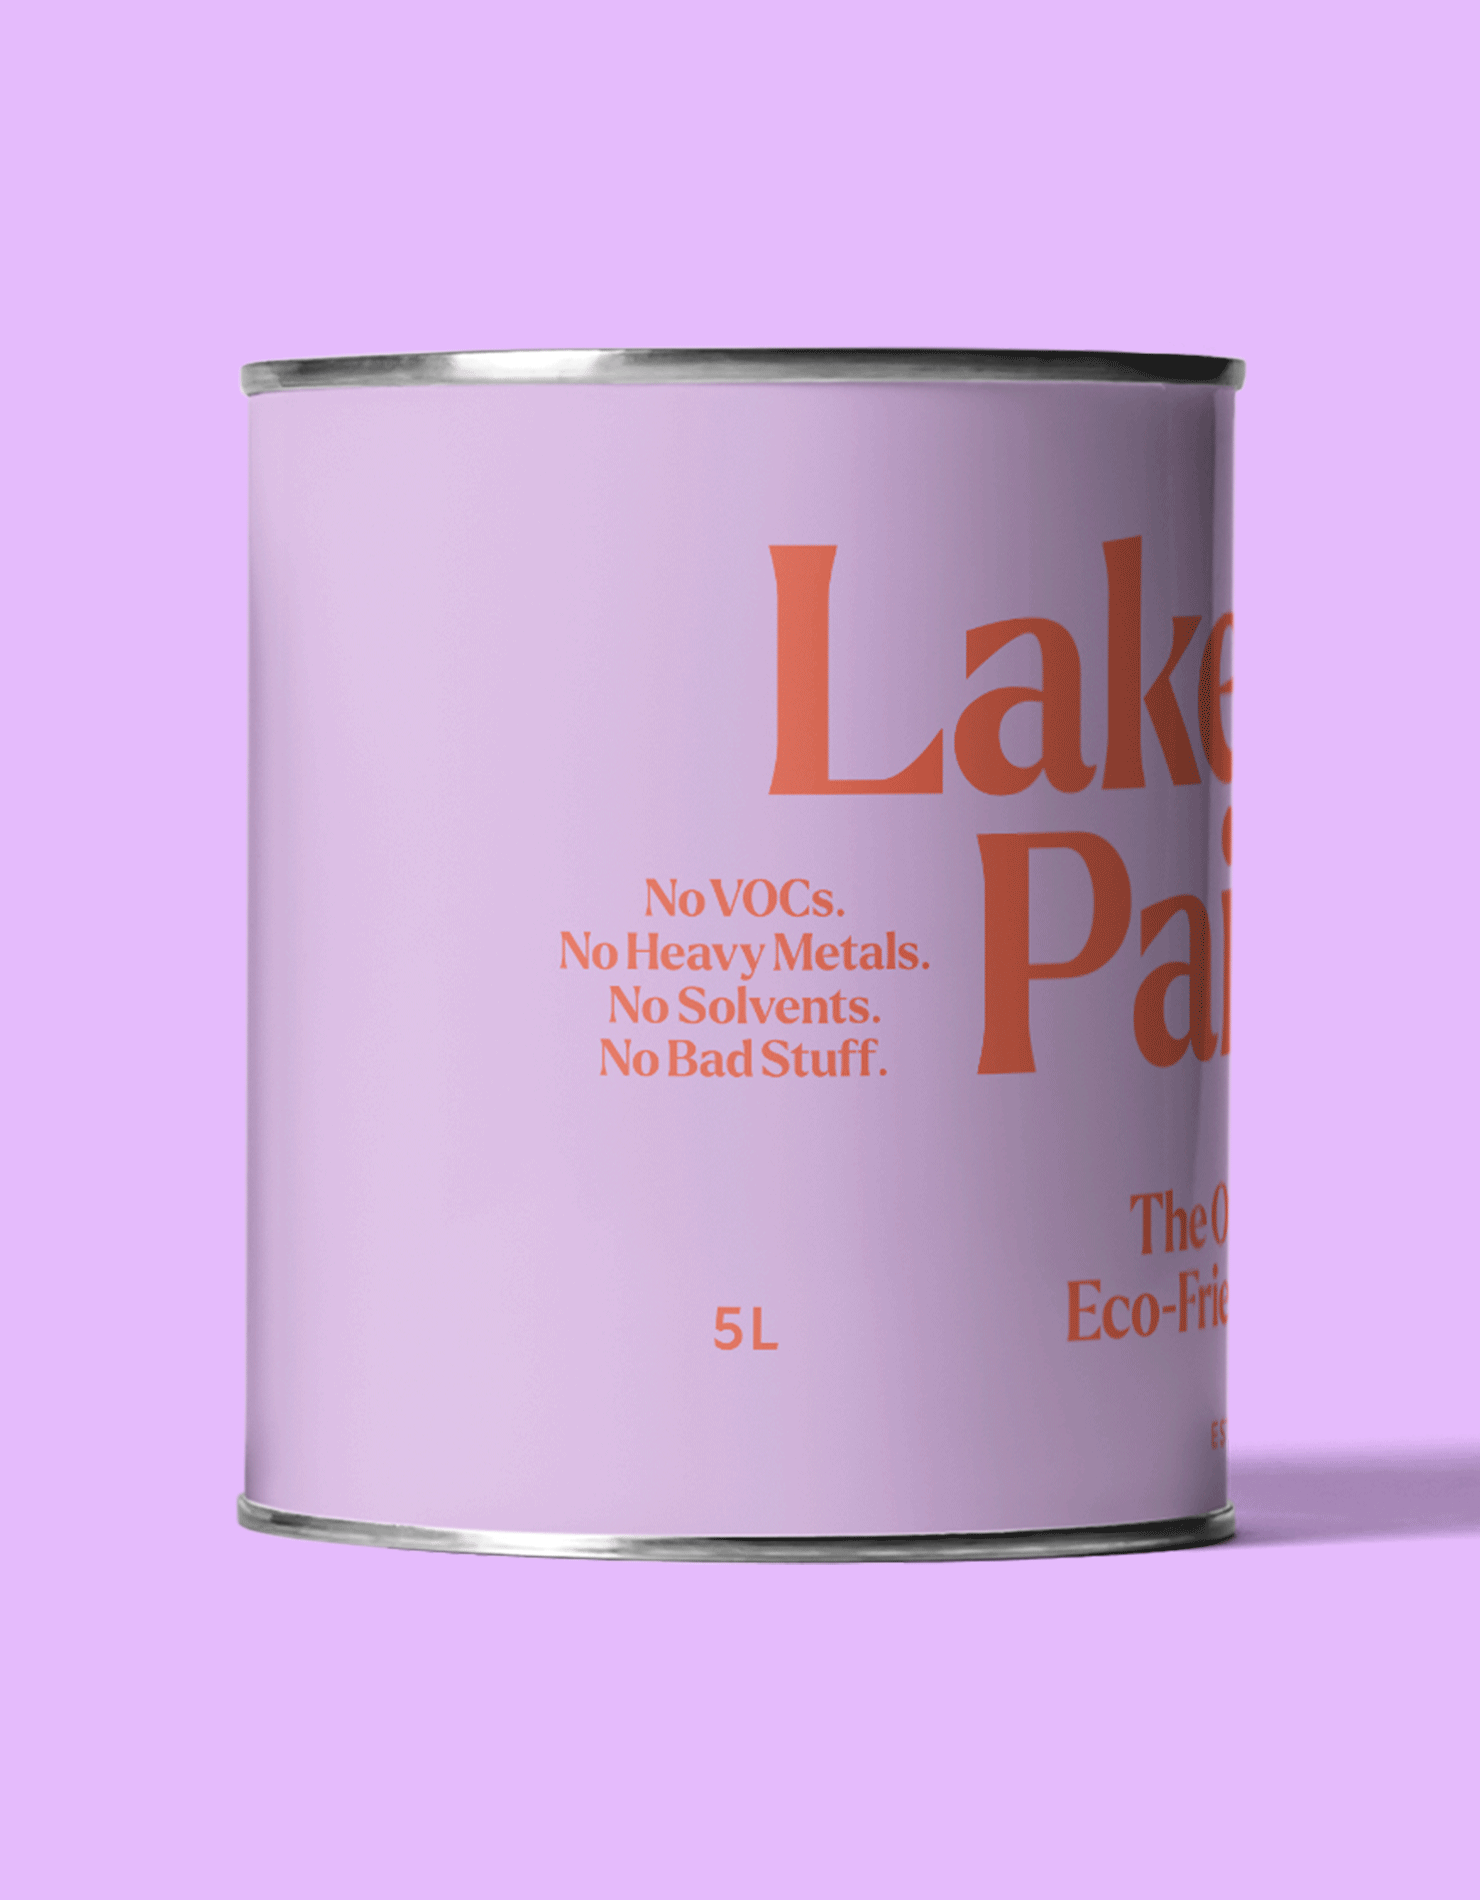 Lakeland Paints - Product Design - Steve Edge Design